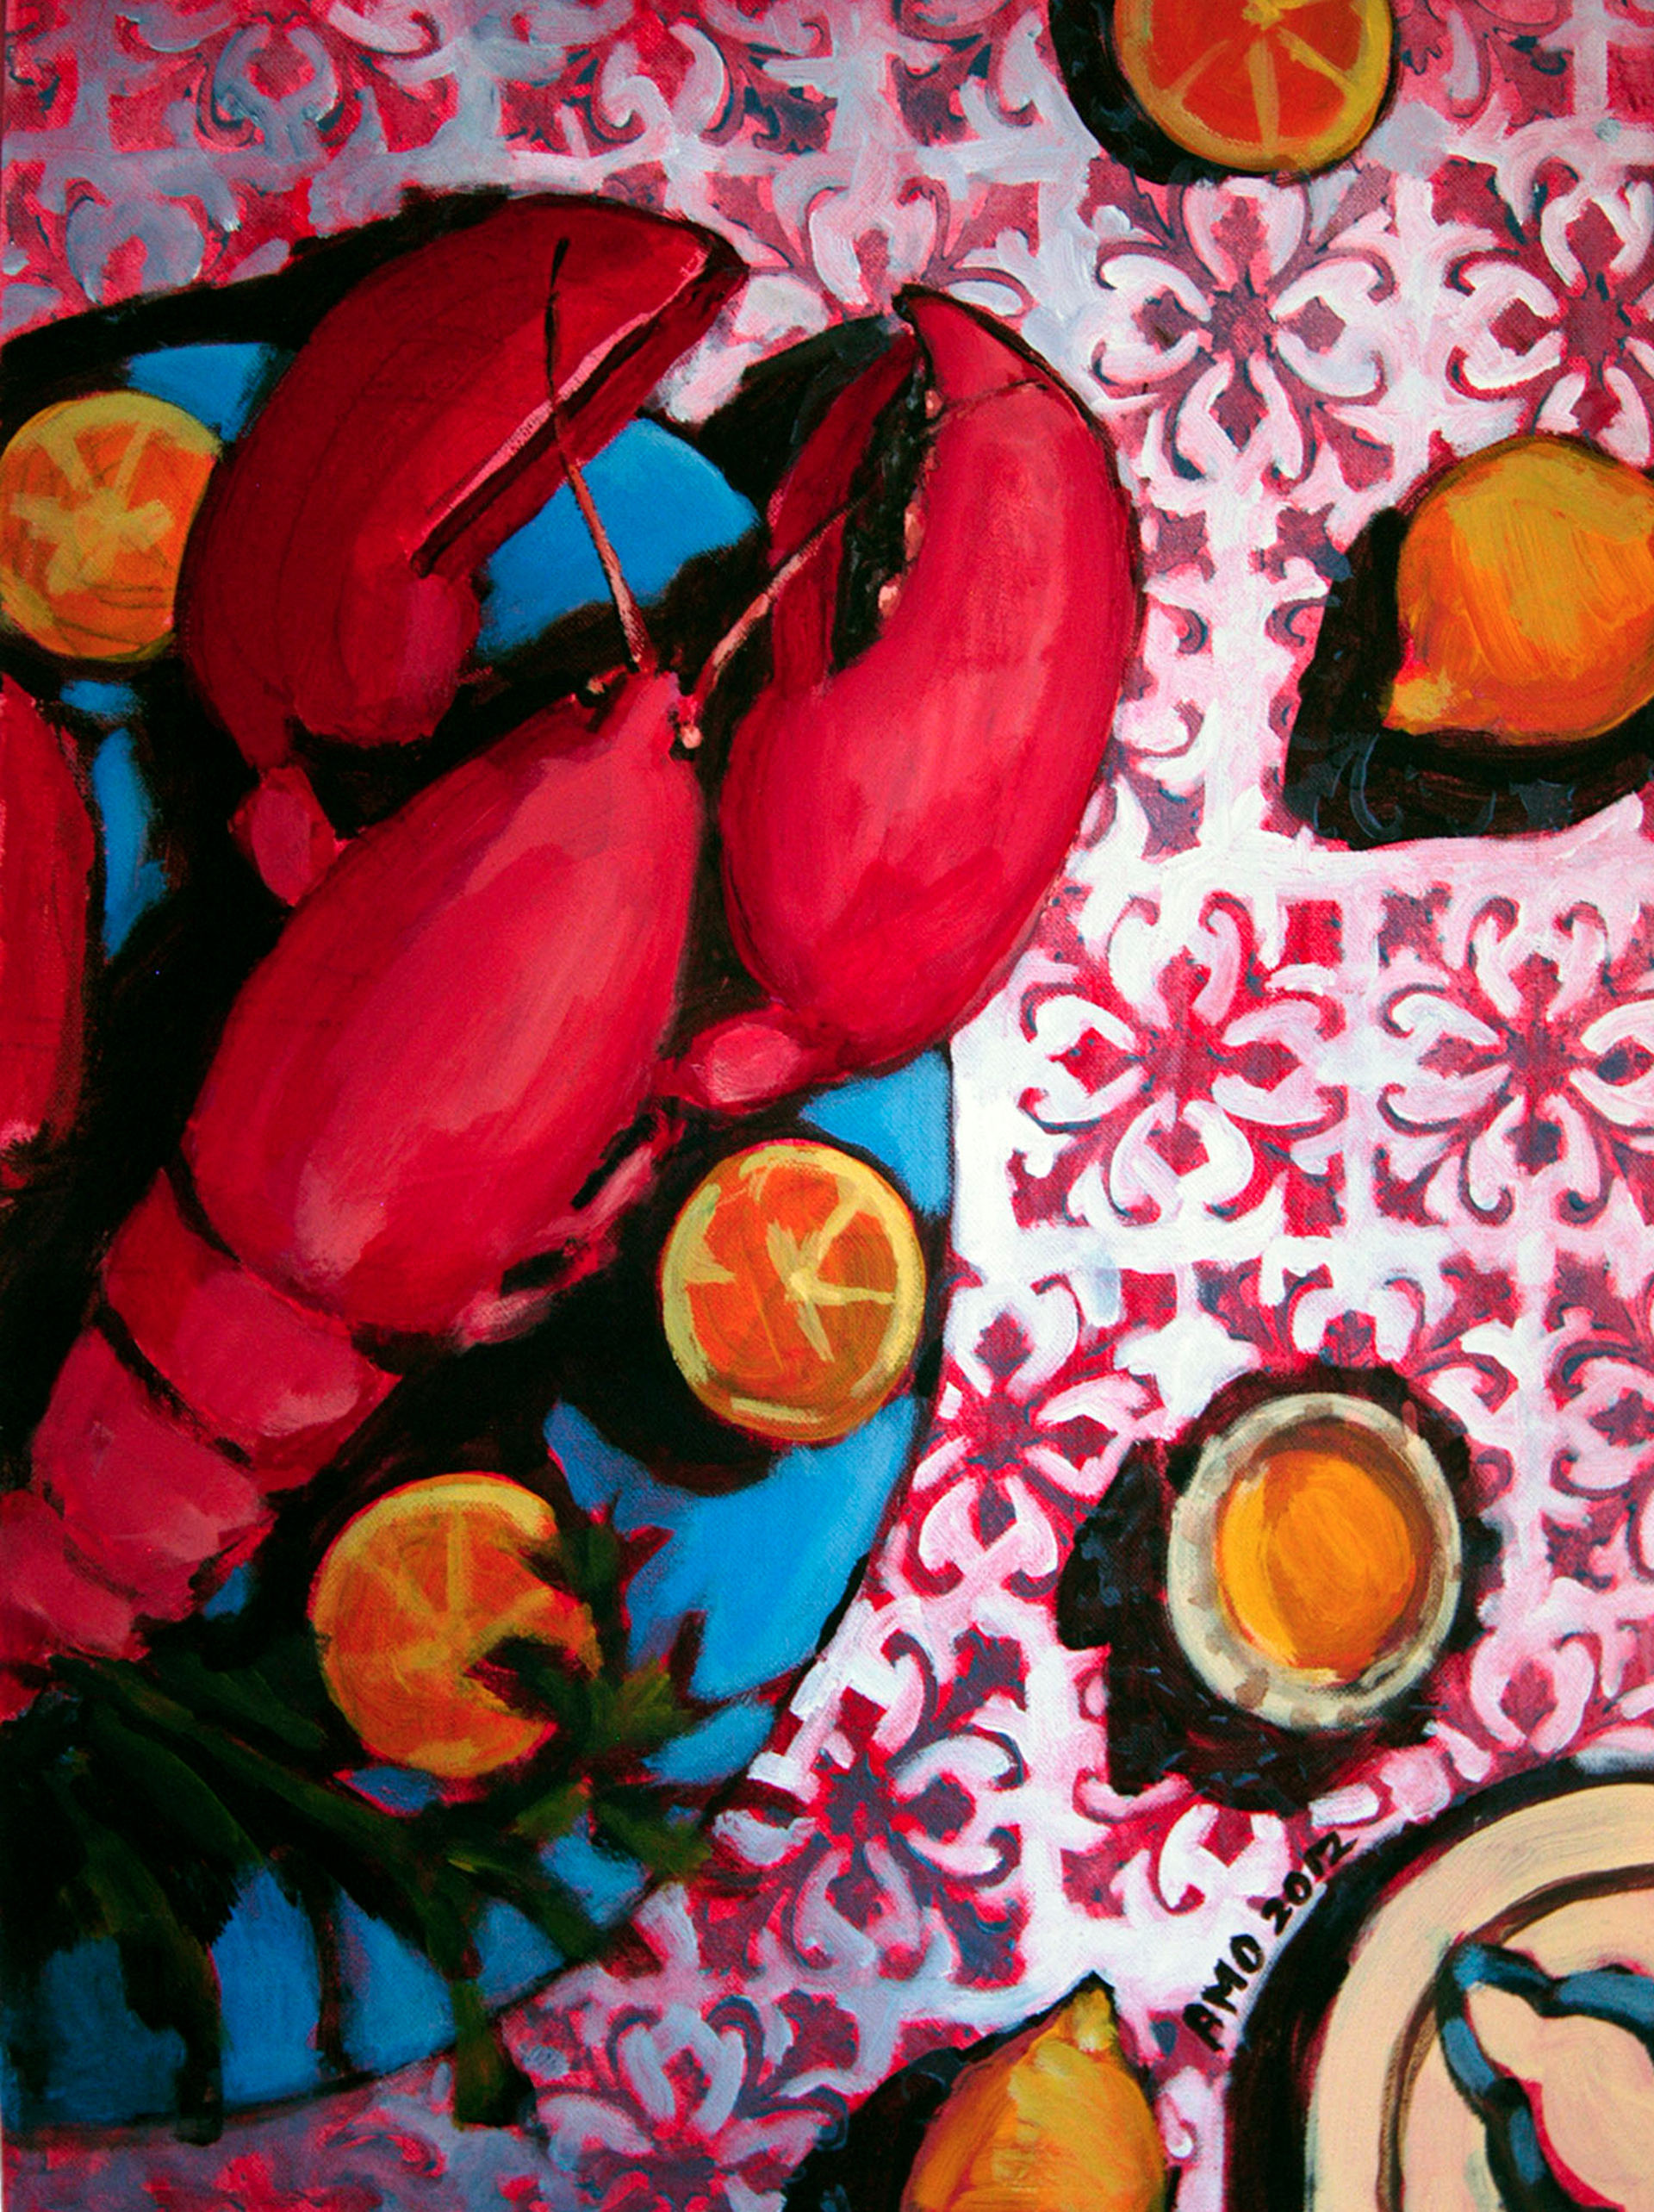 Lobster tonight by Ann Marie O'Dowd